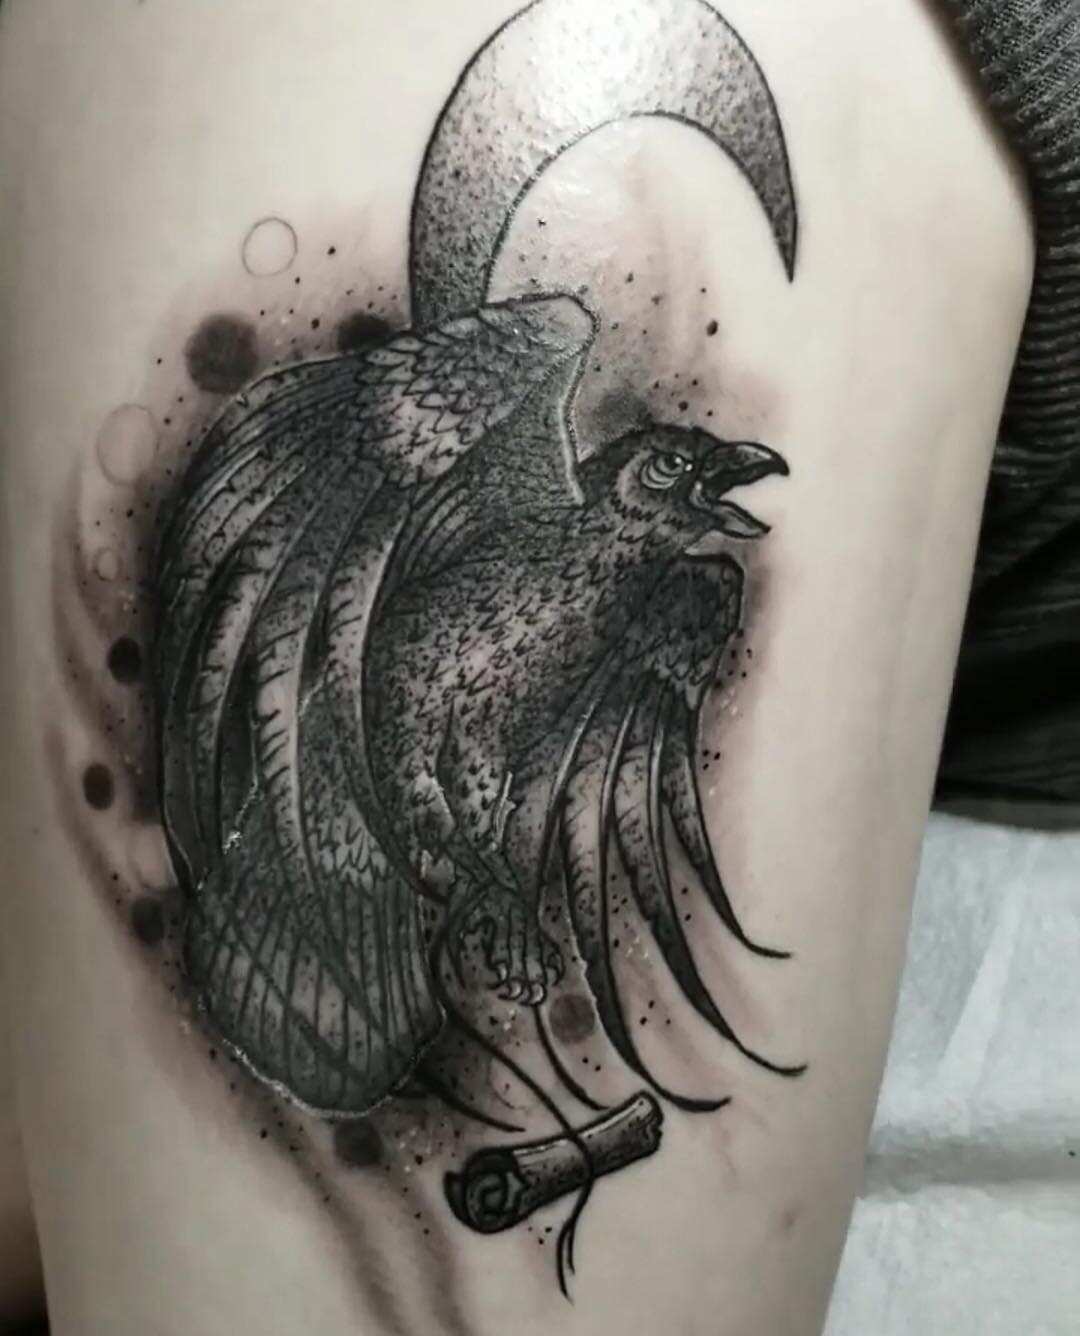 Butterfly skull neck tattoo by TattooistSasha on DeviantArt